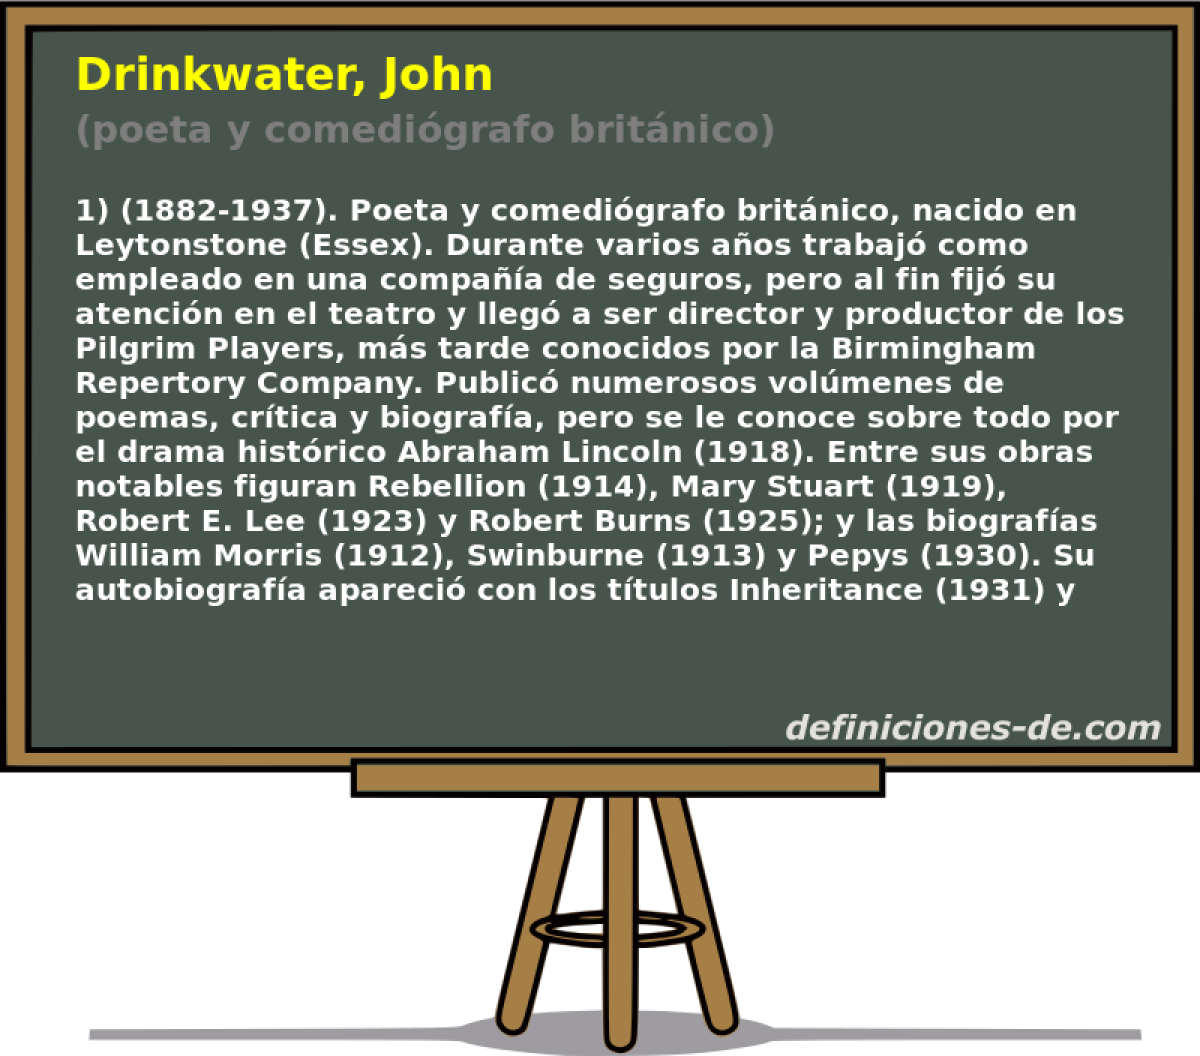 Drinkwater, John (poeta y comedigrafo britnico)